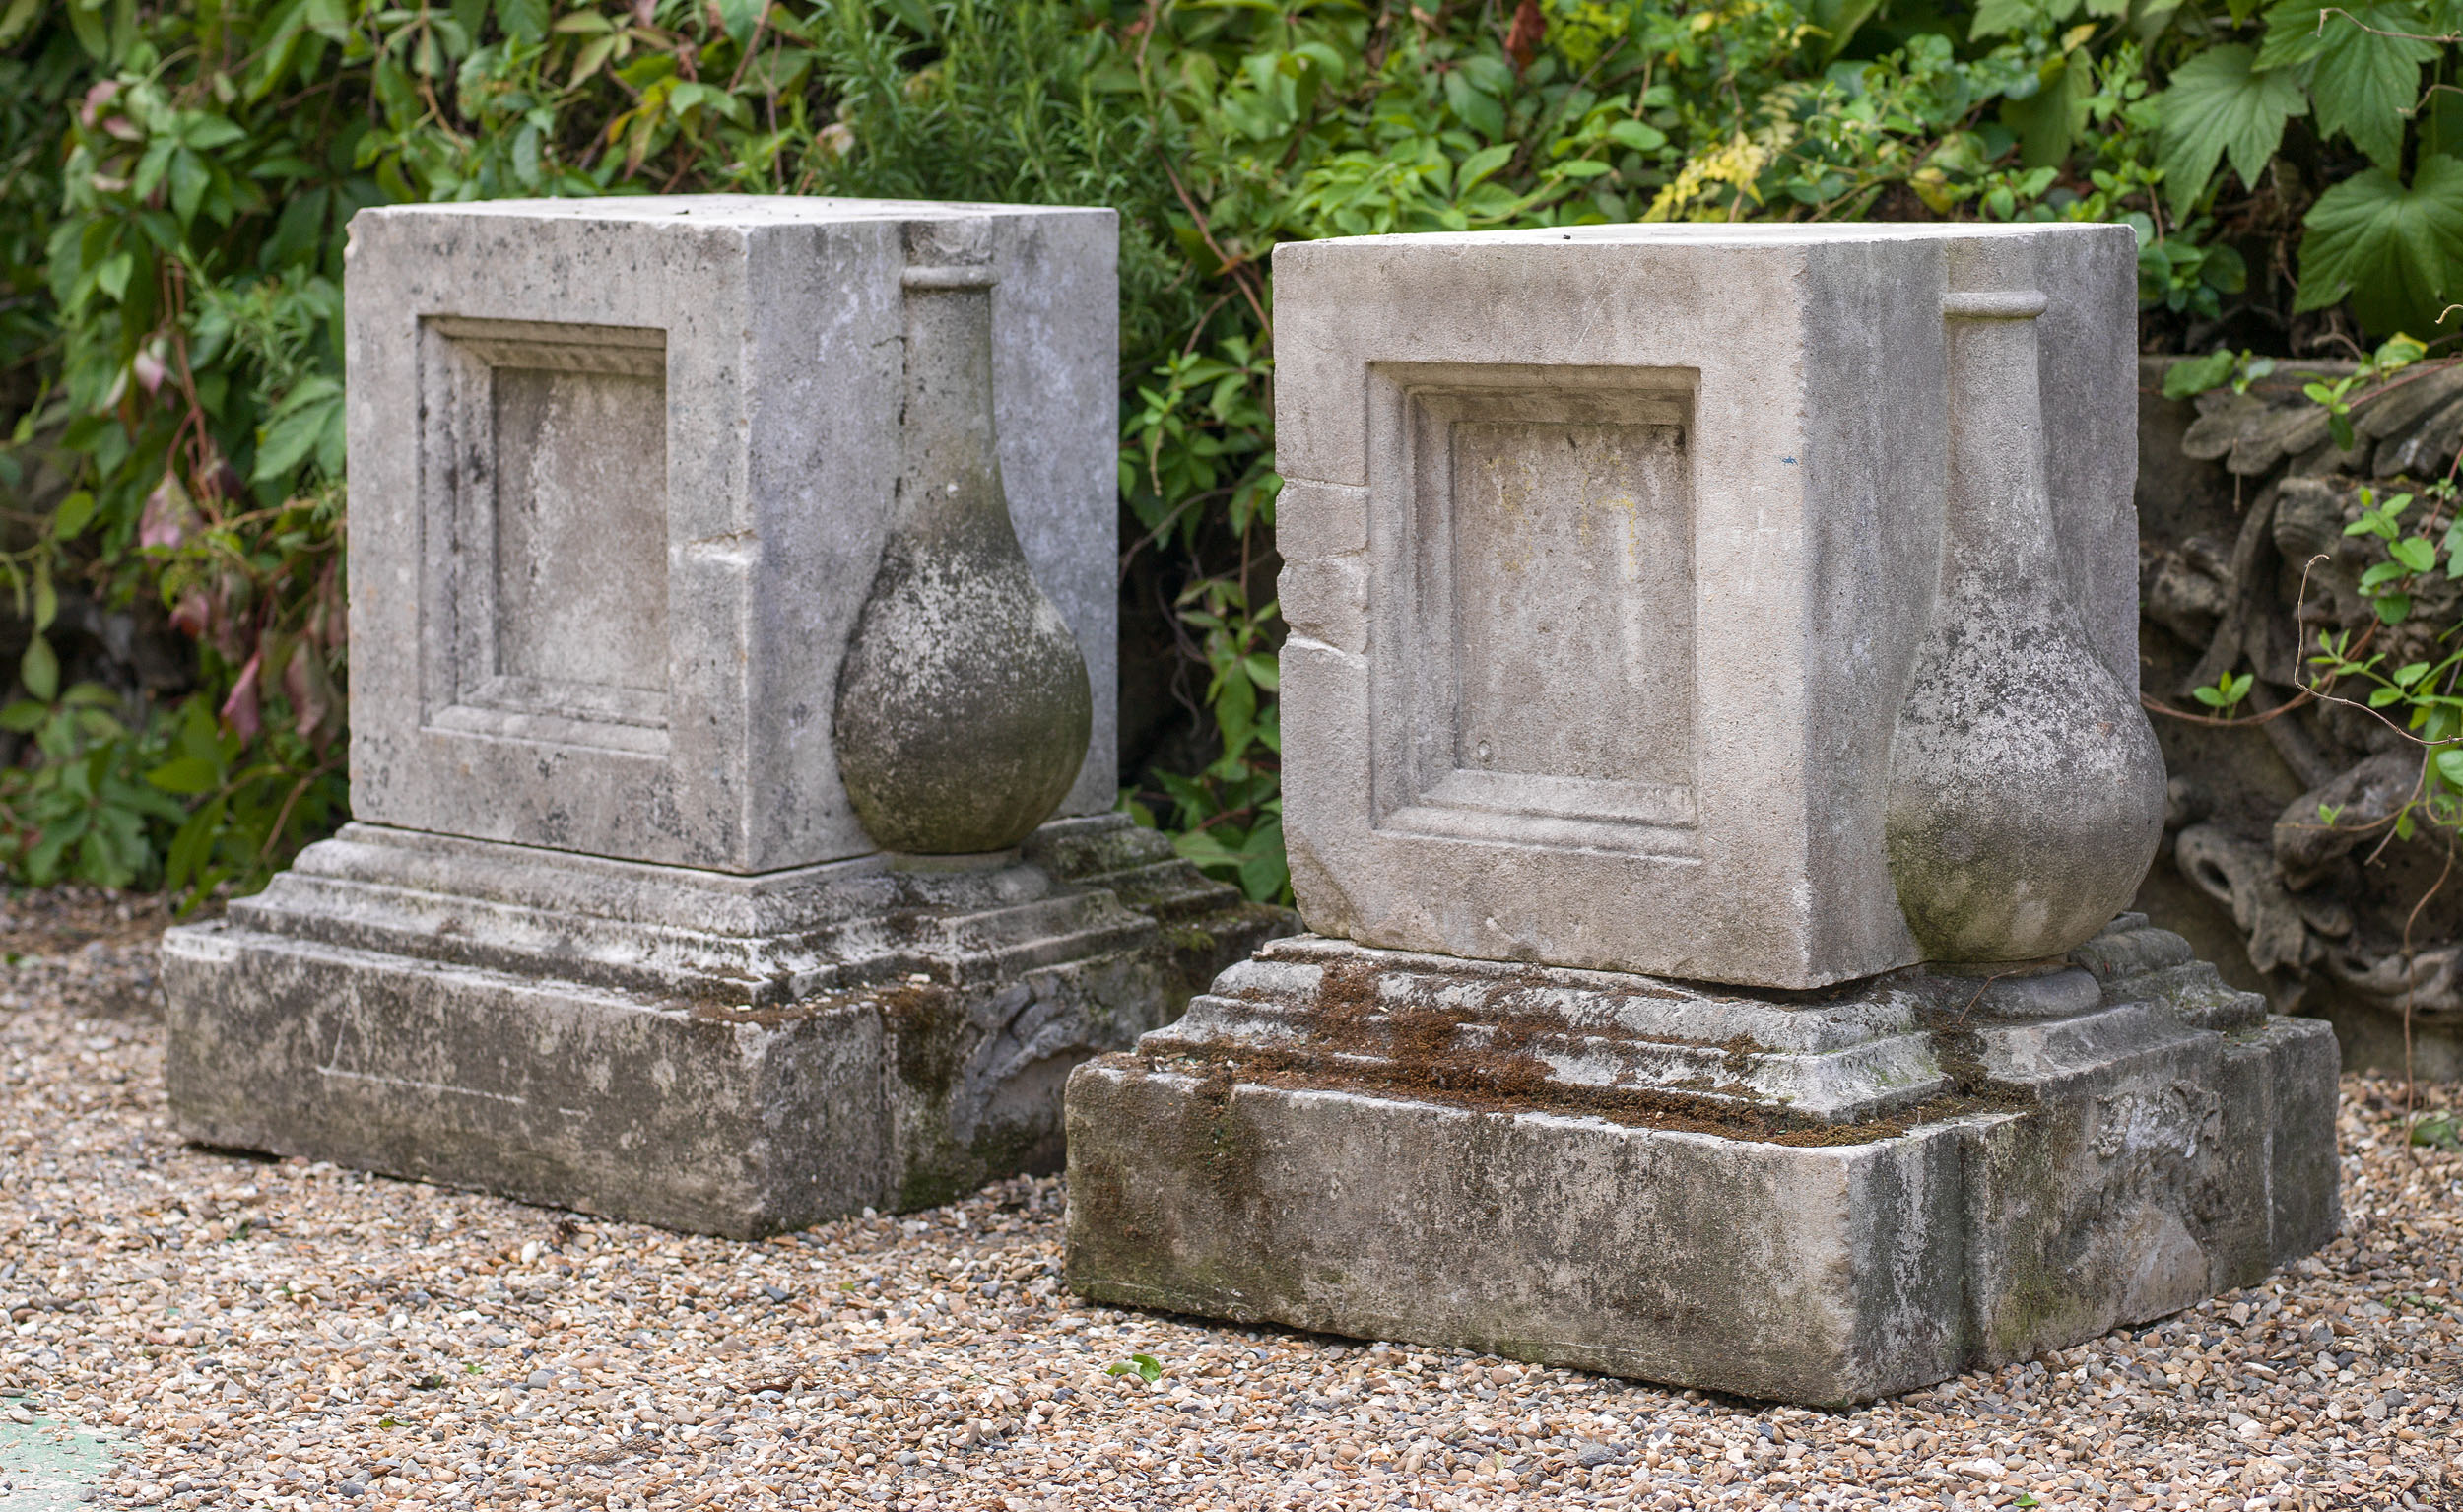 A pair of Portland Stone garden plinths

